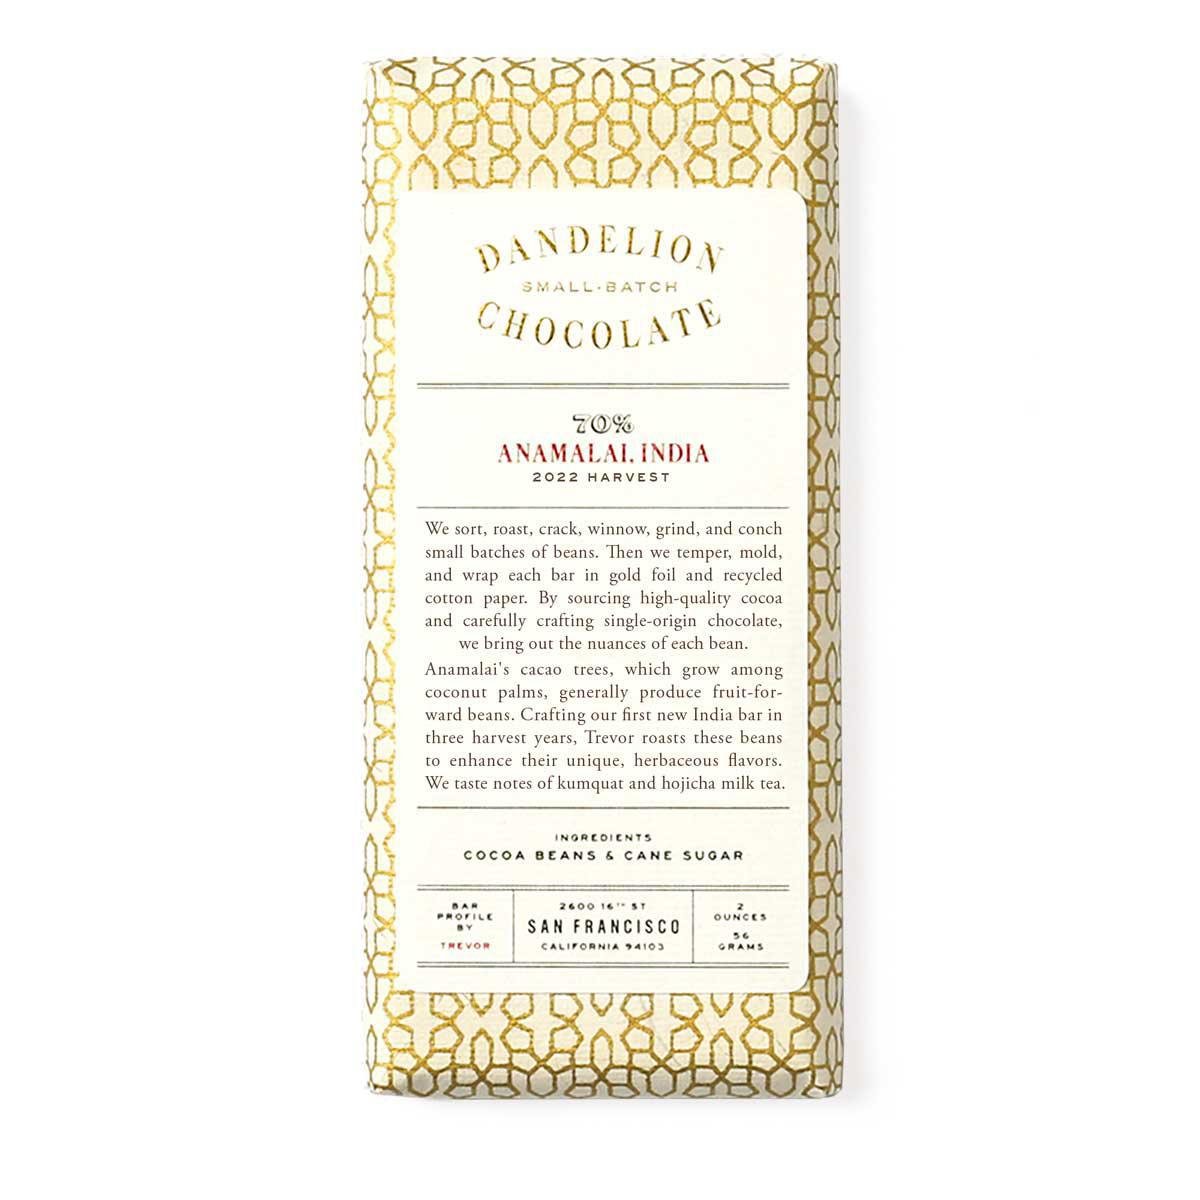 Dandelion Chocolate - Anamalai, India (2OZ | 70%) - The Epicurean Trader